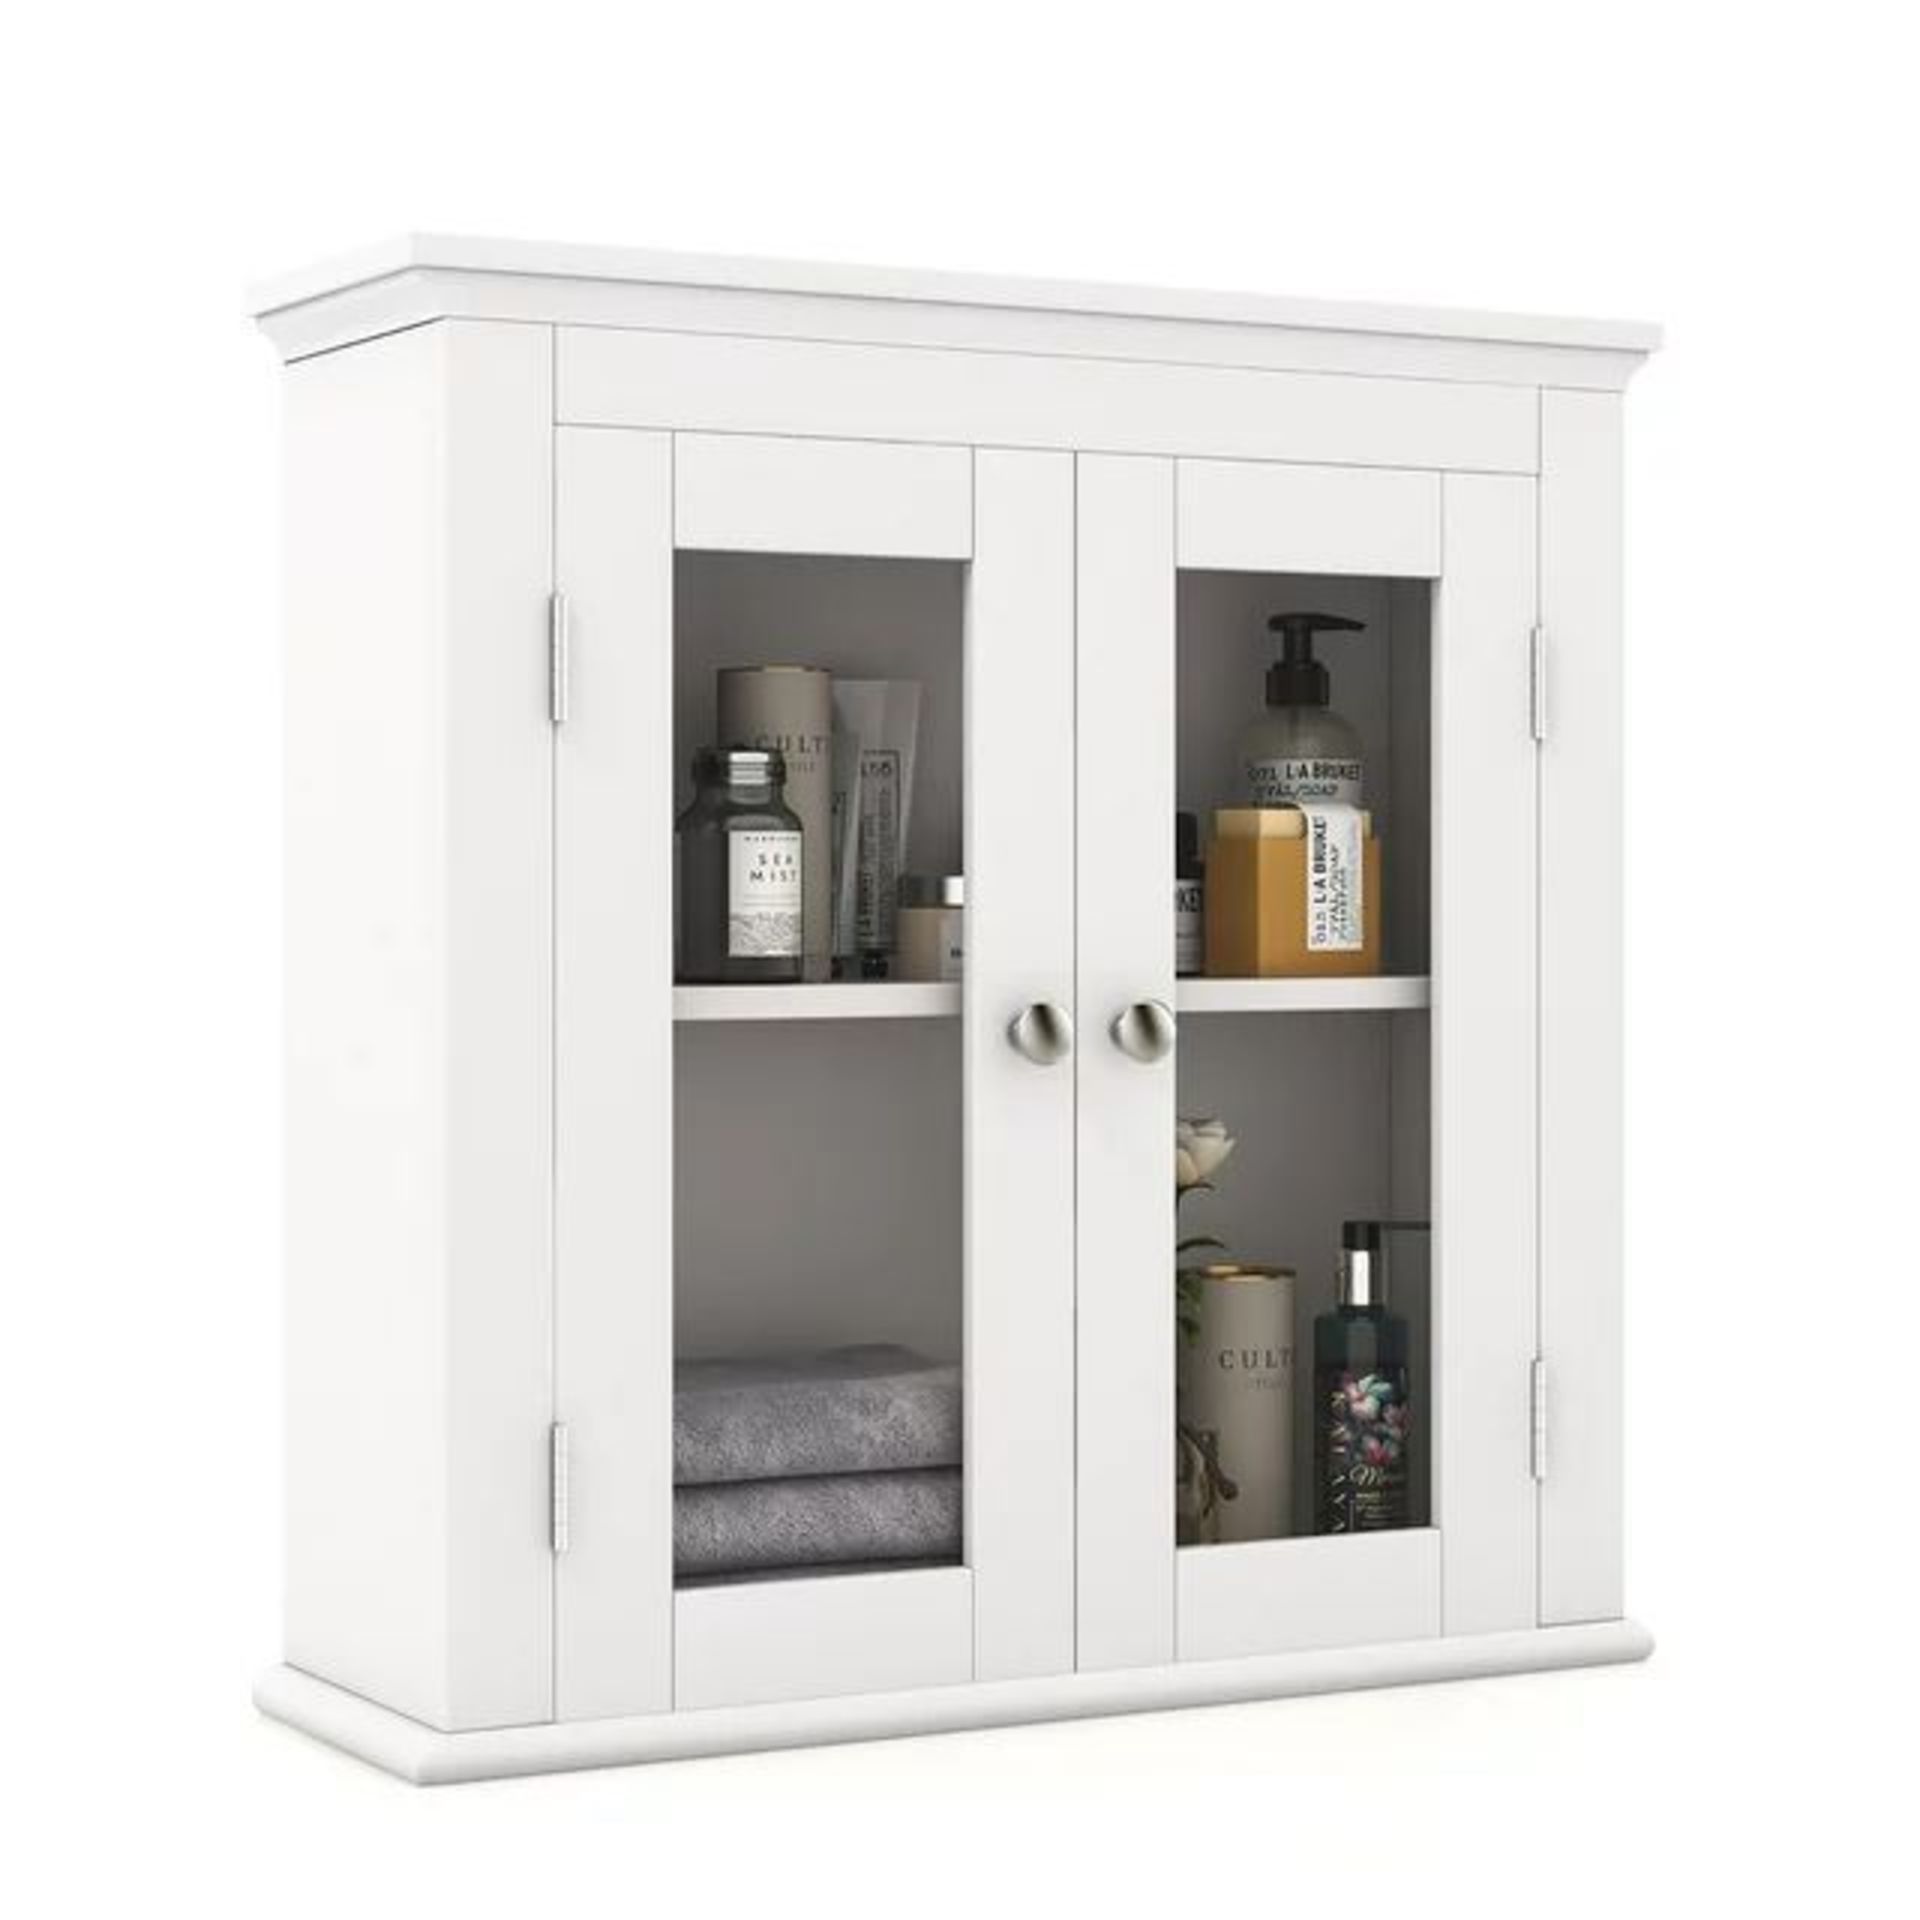 2-Door Bathroom Wall Mount Medicine Cabinet with Tempered Glass & Adjustable Shelf. - ER26.